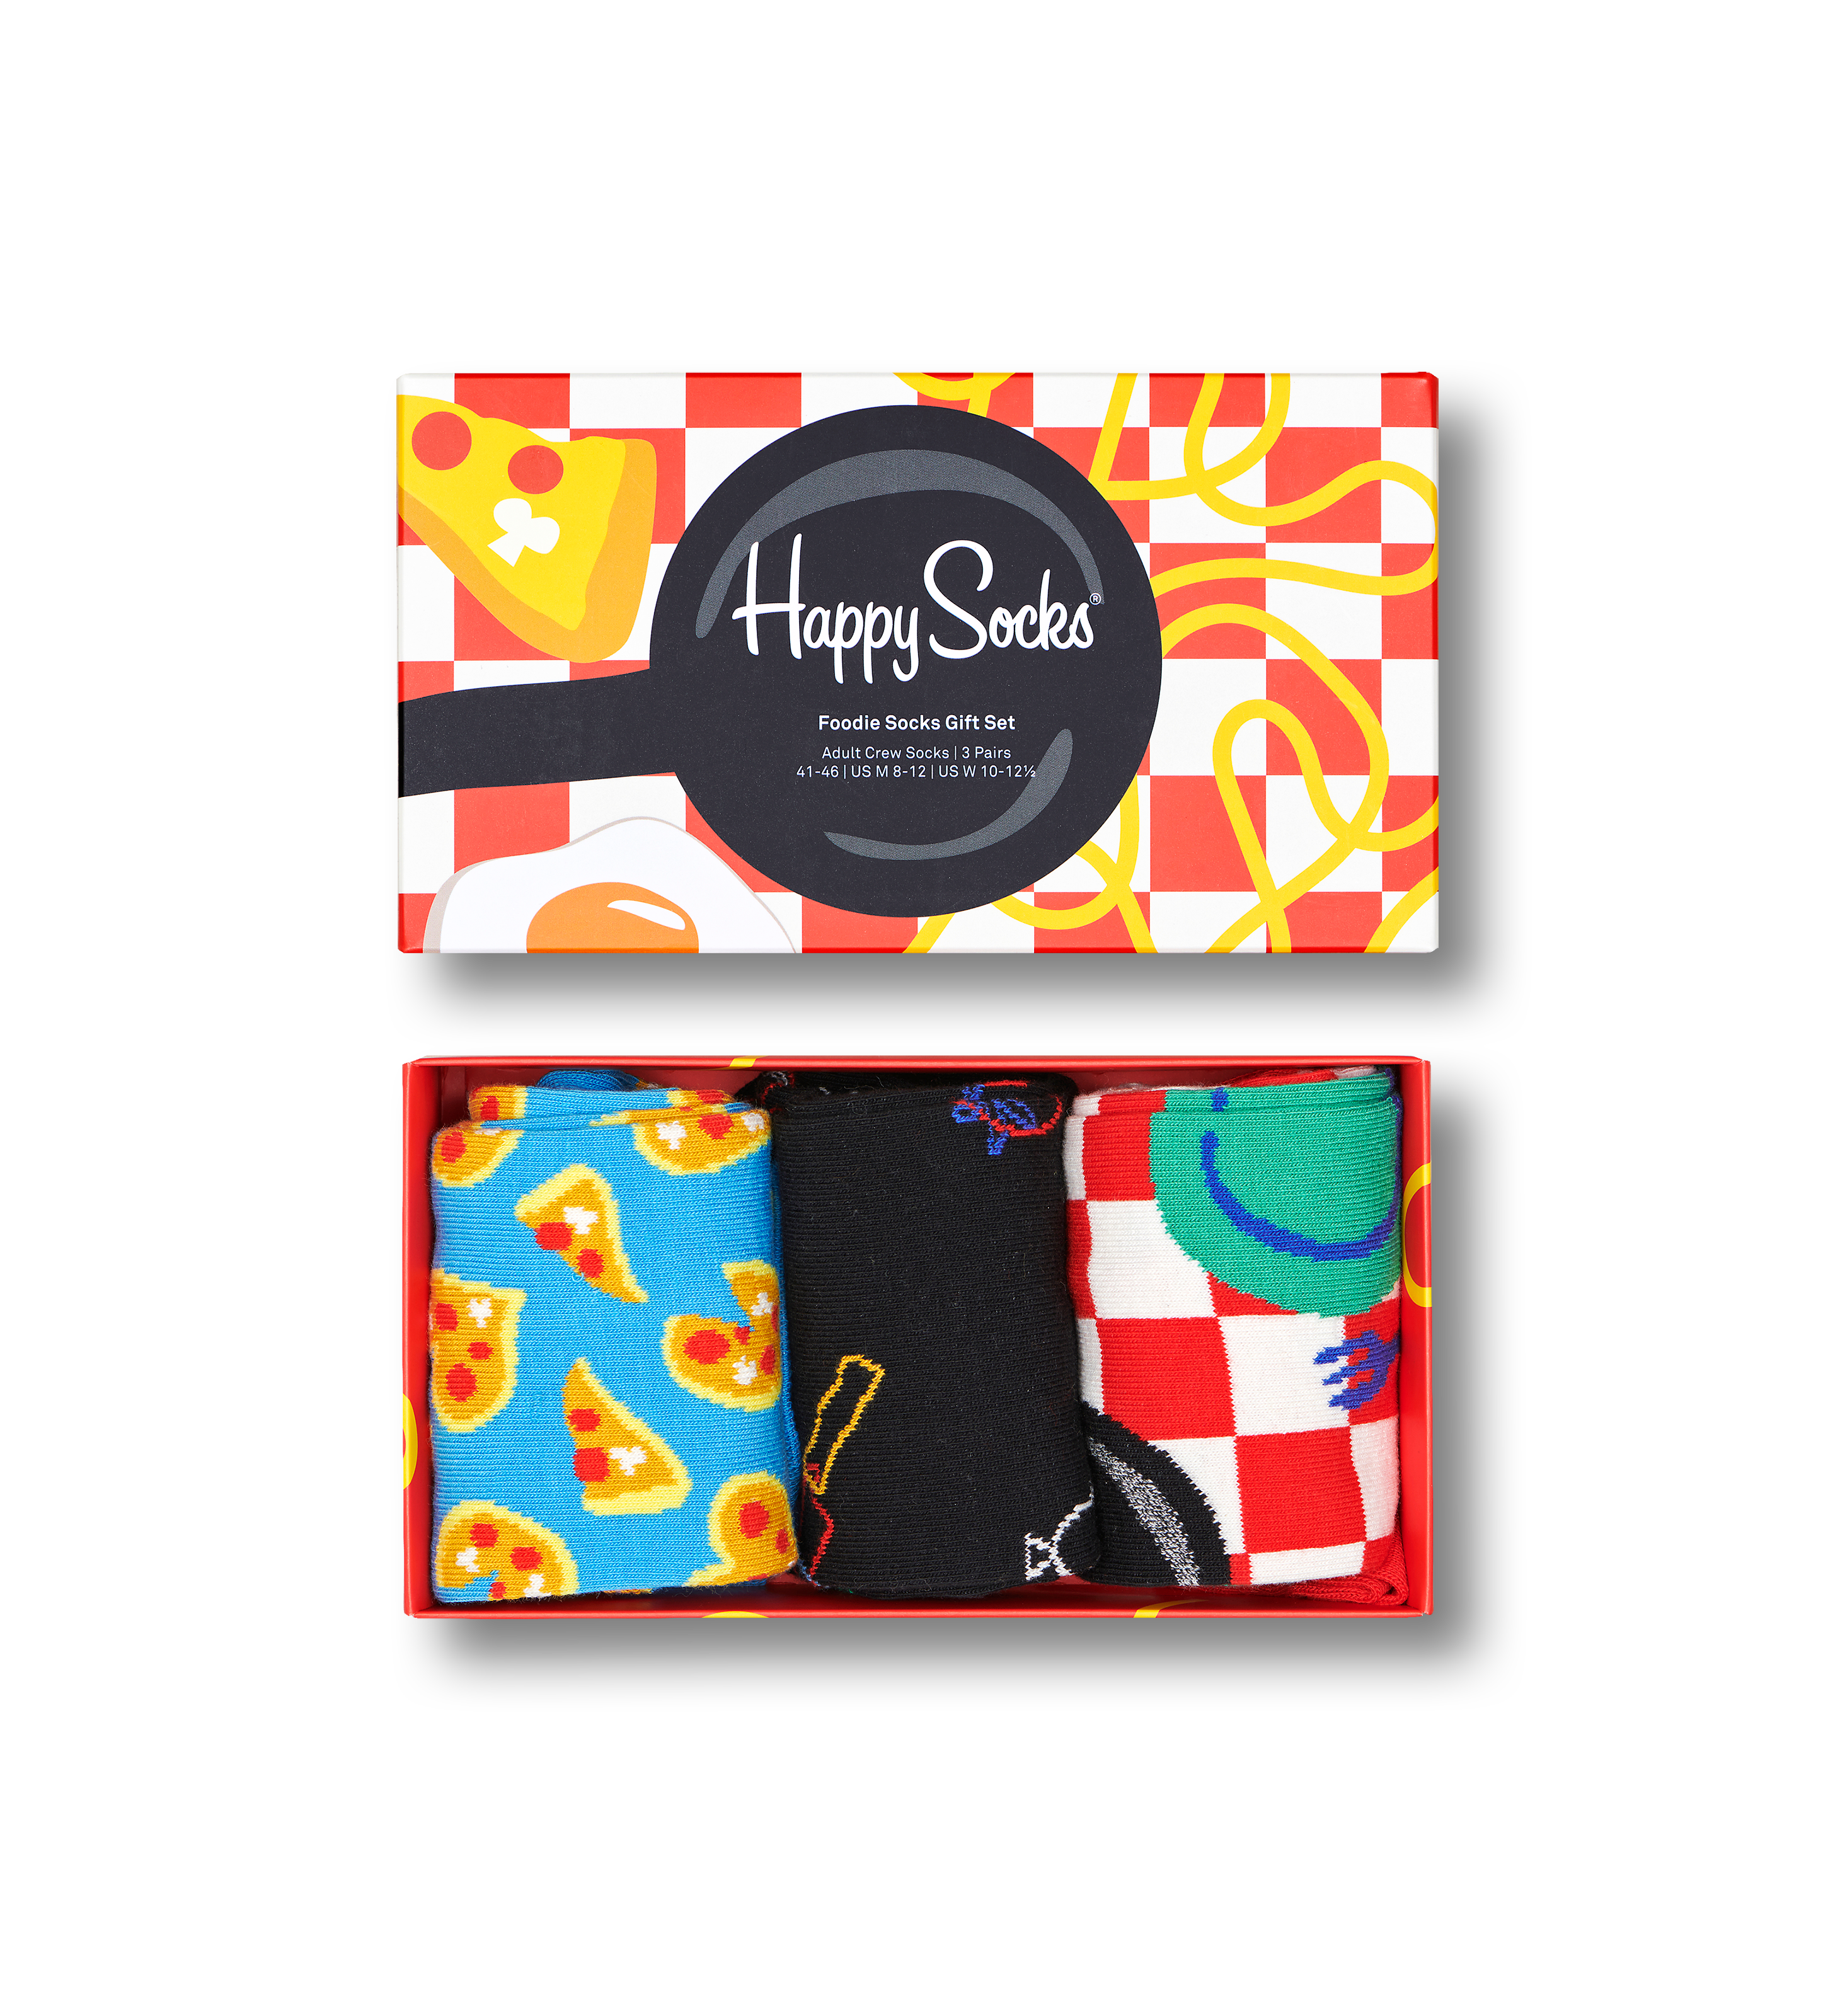 food gift set 3-pack | happy socks